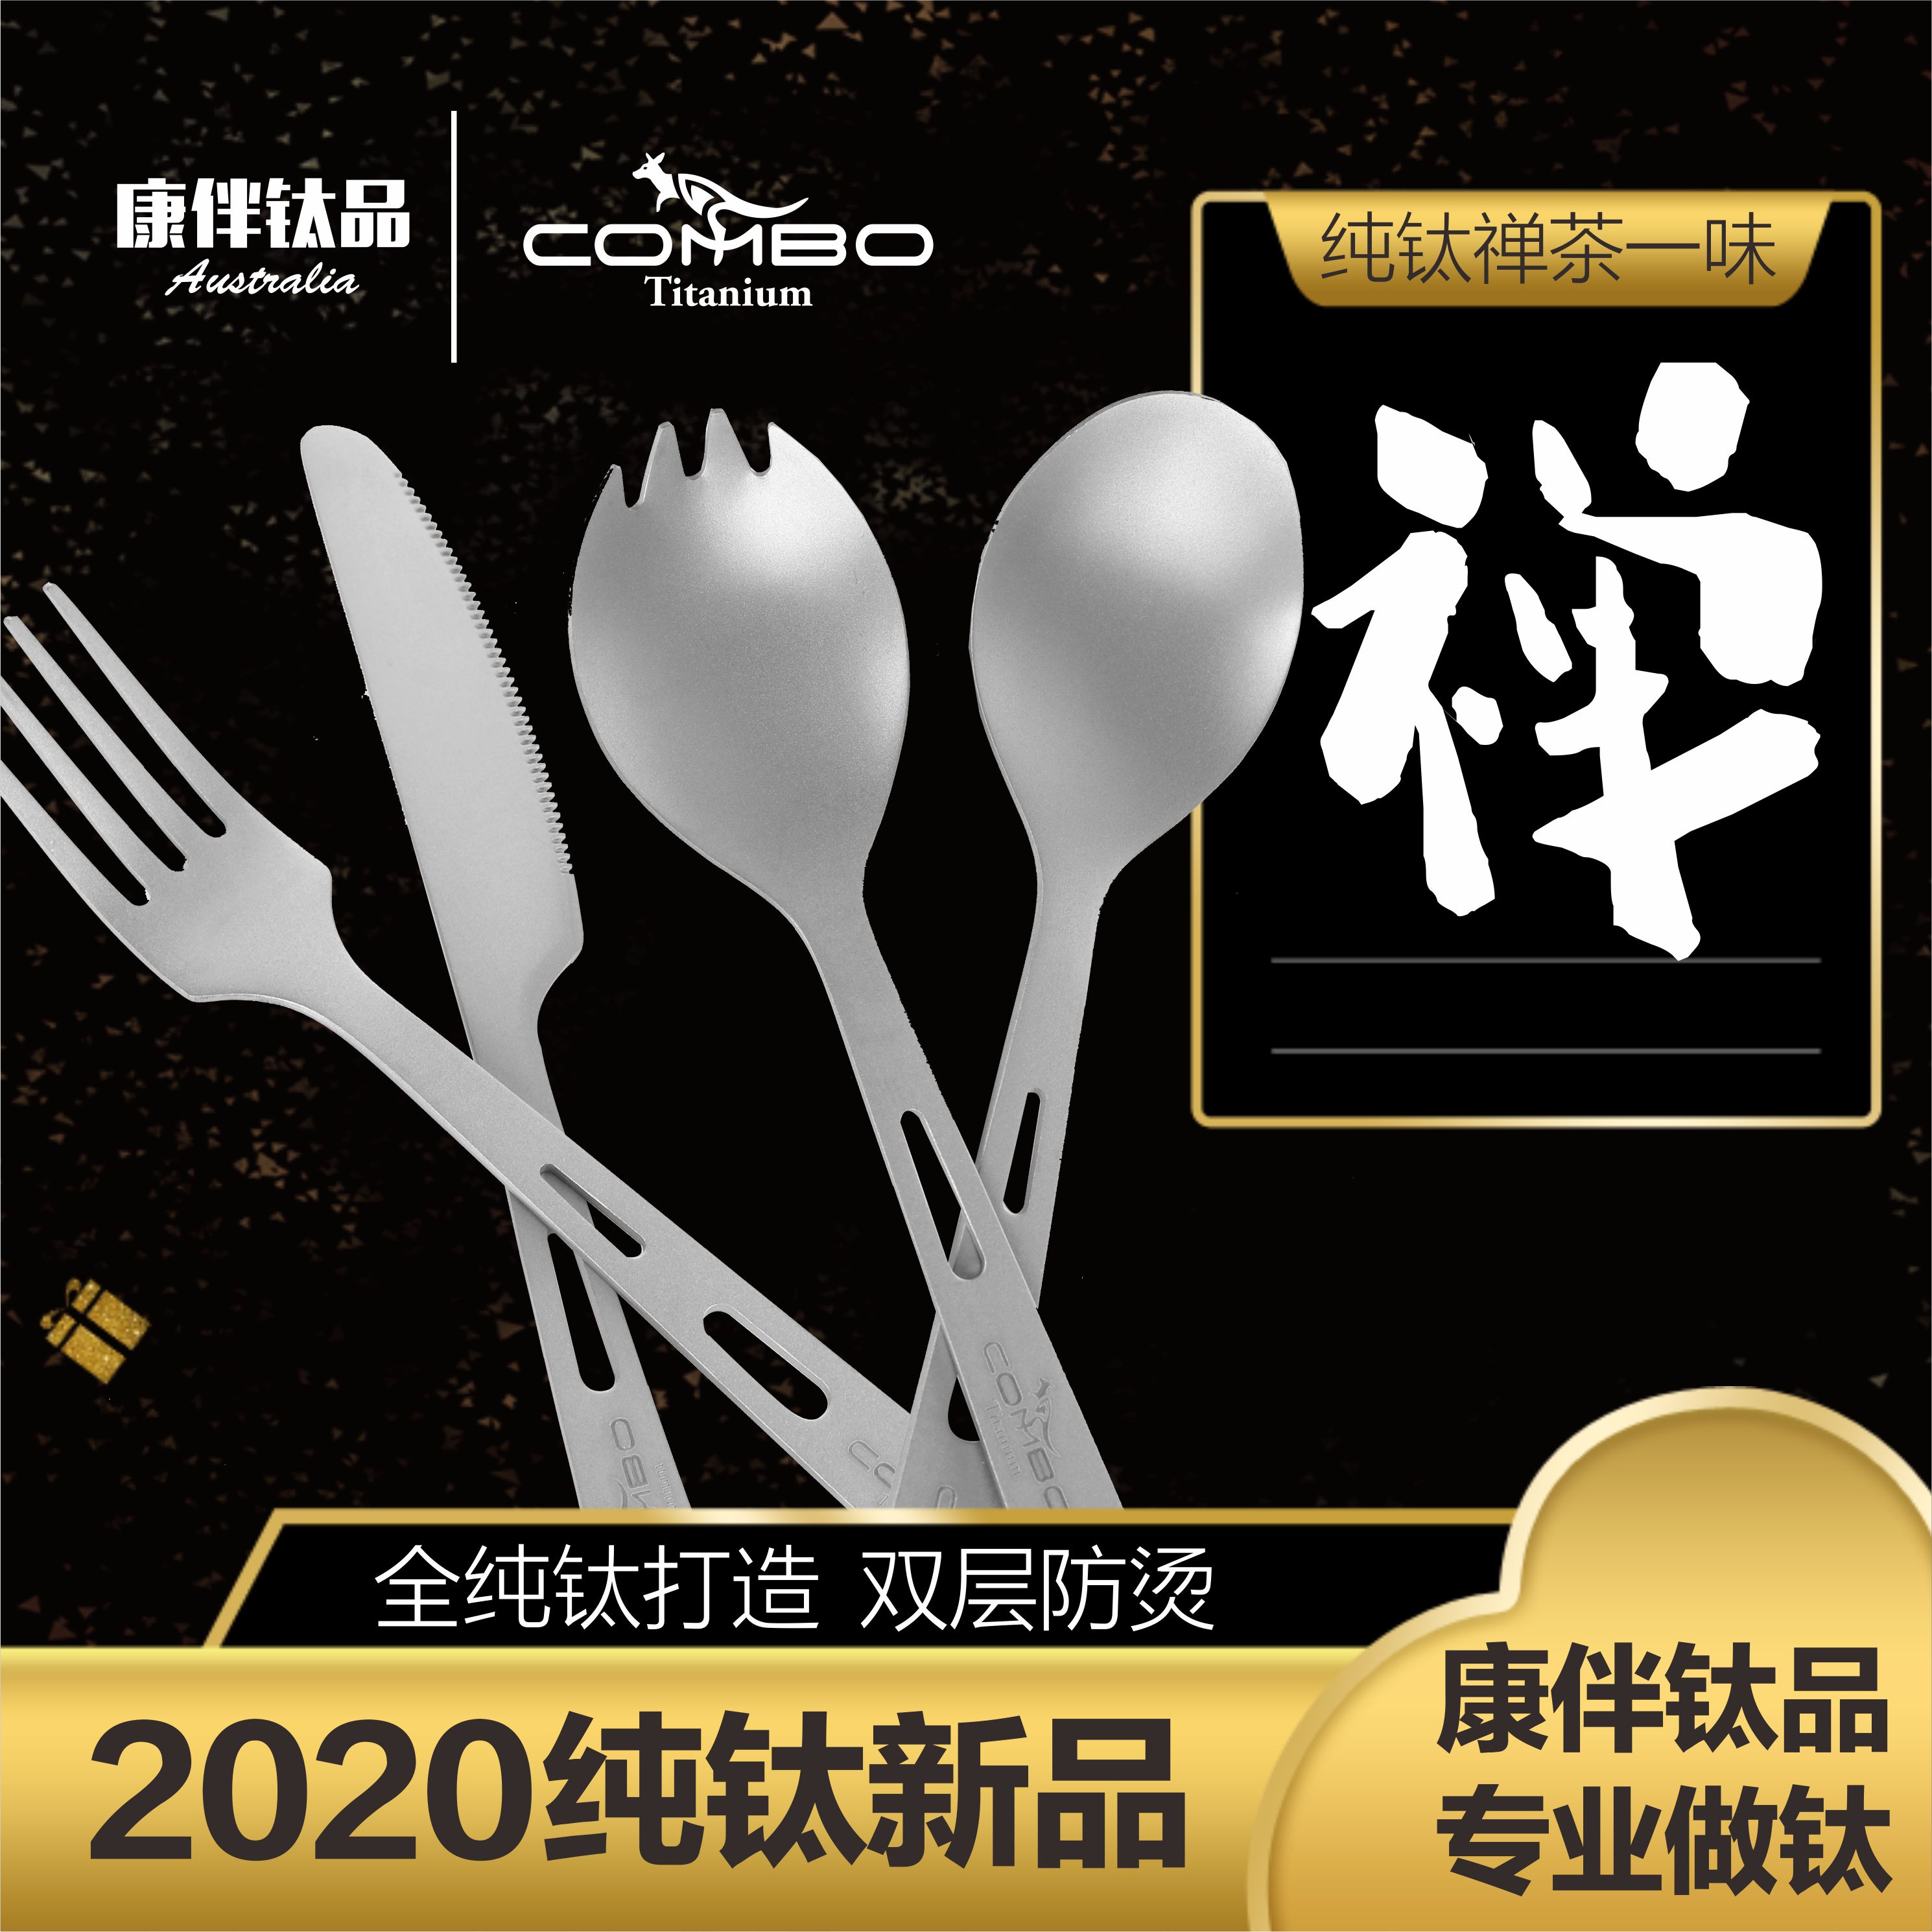 Kangbai titanium outdoor picnic camping Pure titanium ultra-light portable fork spoon cookware tableware three-piece set spoon